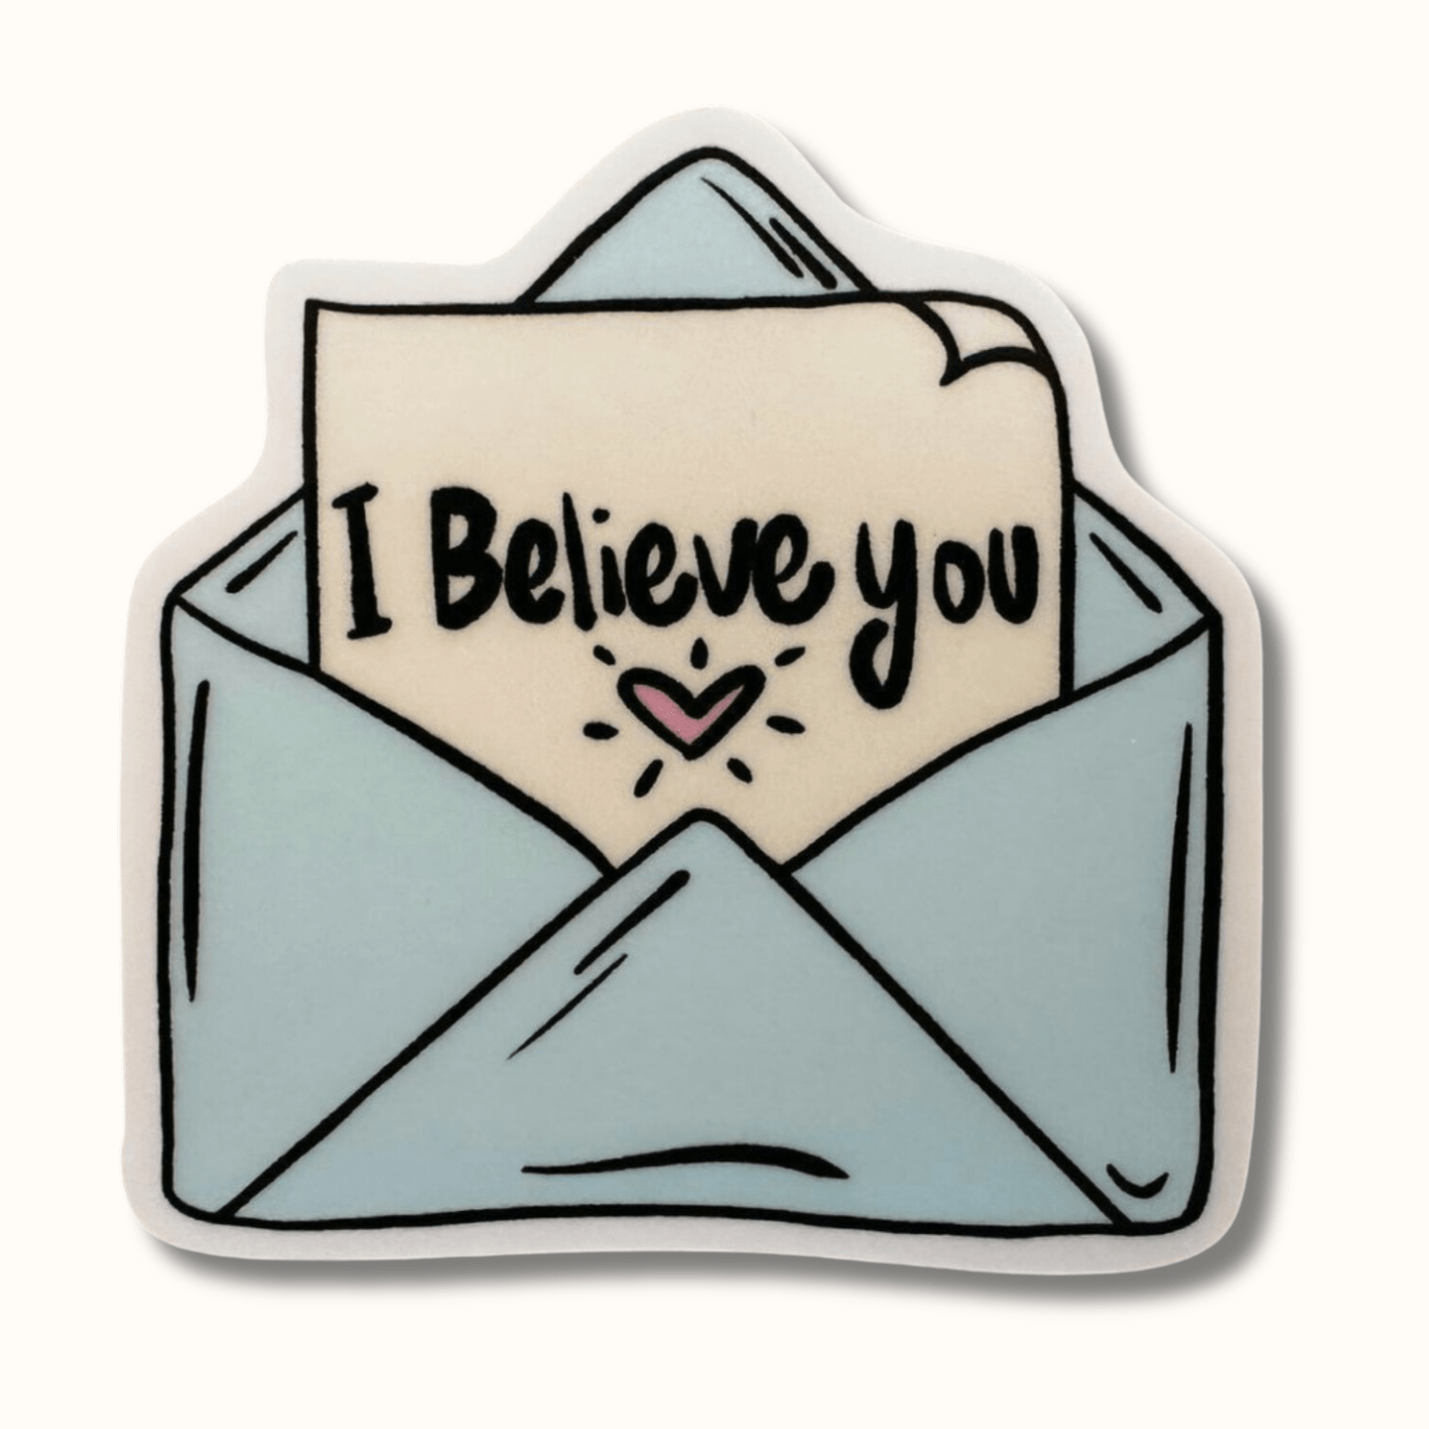 "I Believe You" BeMo Sticker - BeMo Journal